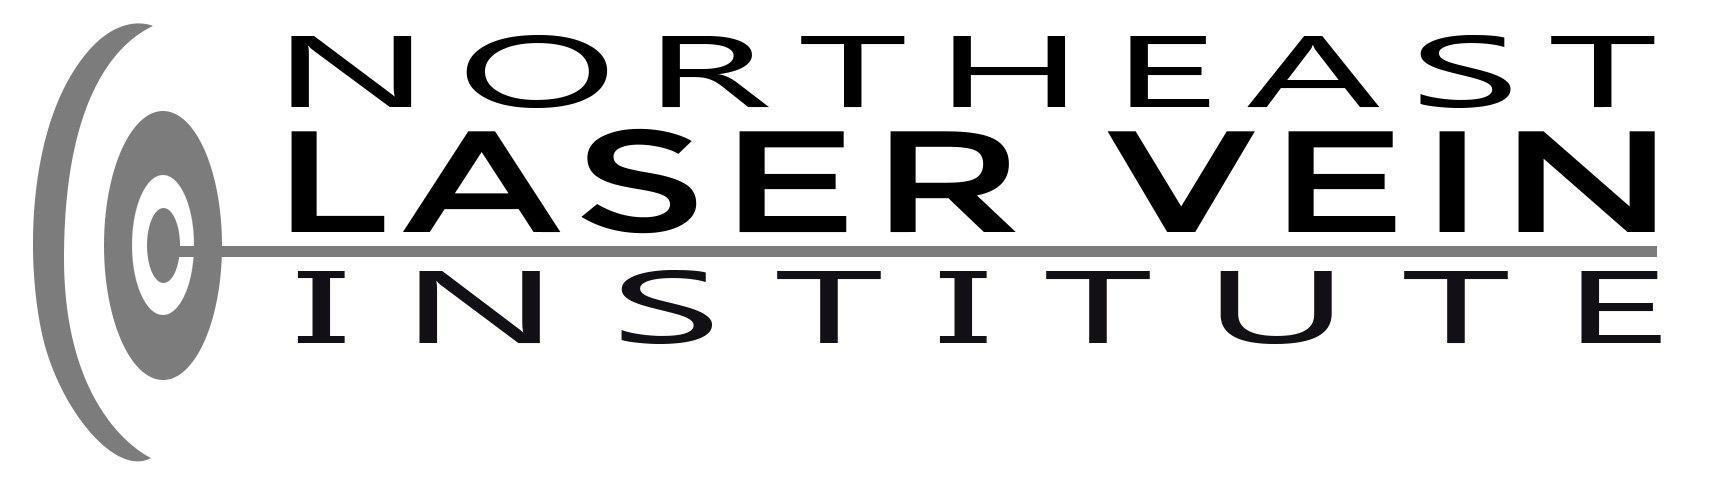 Northeast Laser Vein Institute in Ridgewood NJ, West Patterson NJ